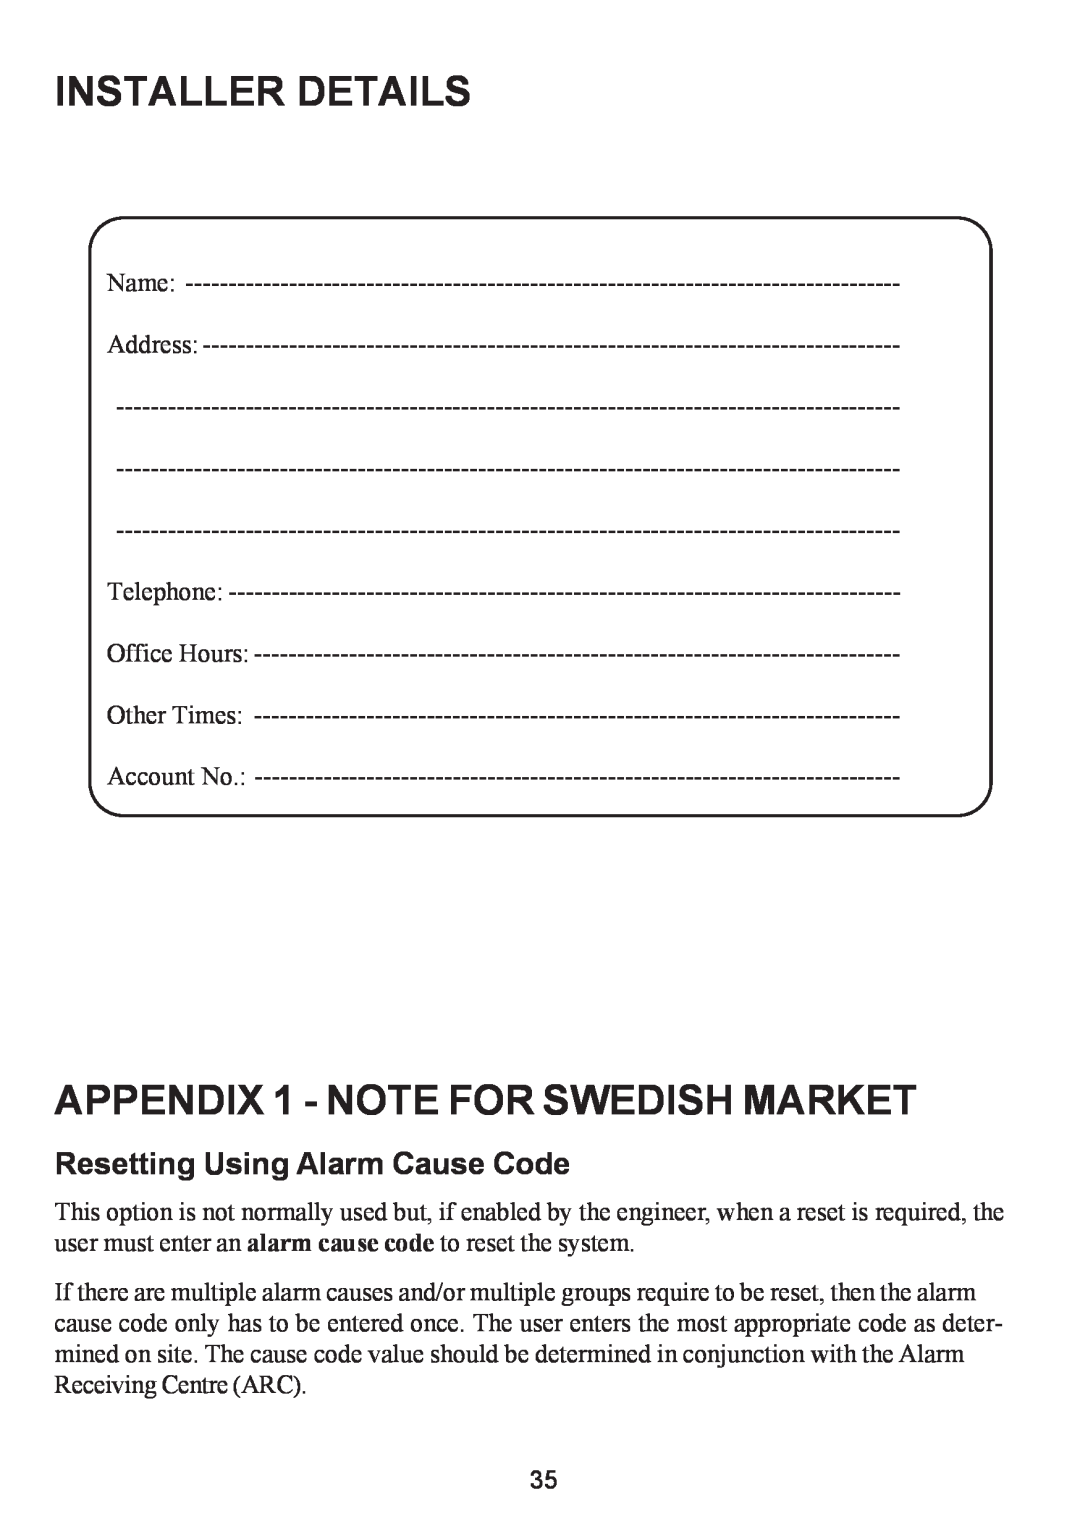 Honeywell 3-144C, 3-520C, 3-48C Installer Details, APPENDIX 1 - NOTE FOR SWEDISH MARKET, Resetting Using Alarm Cause Code 